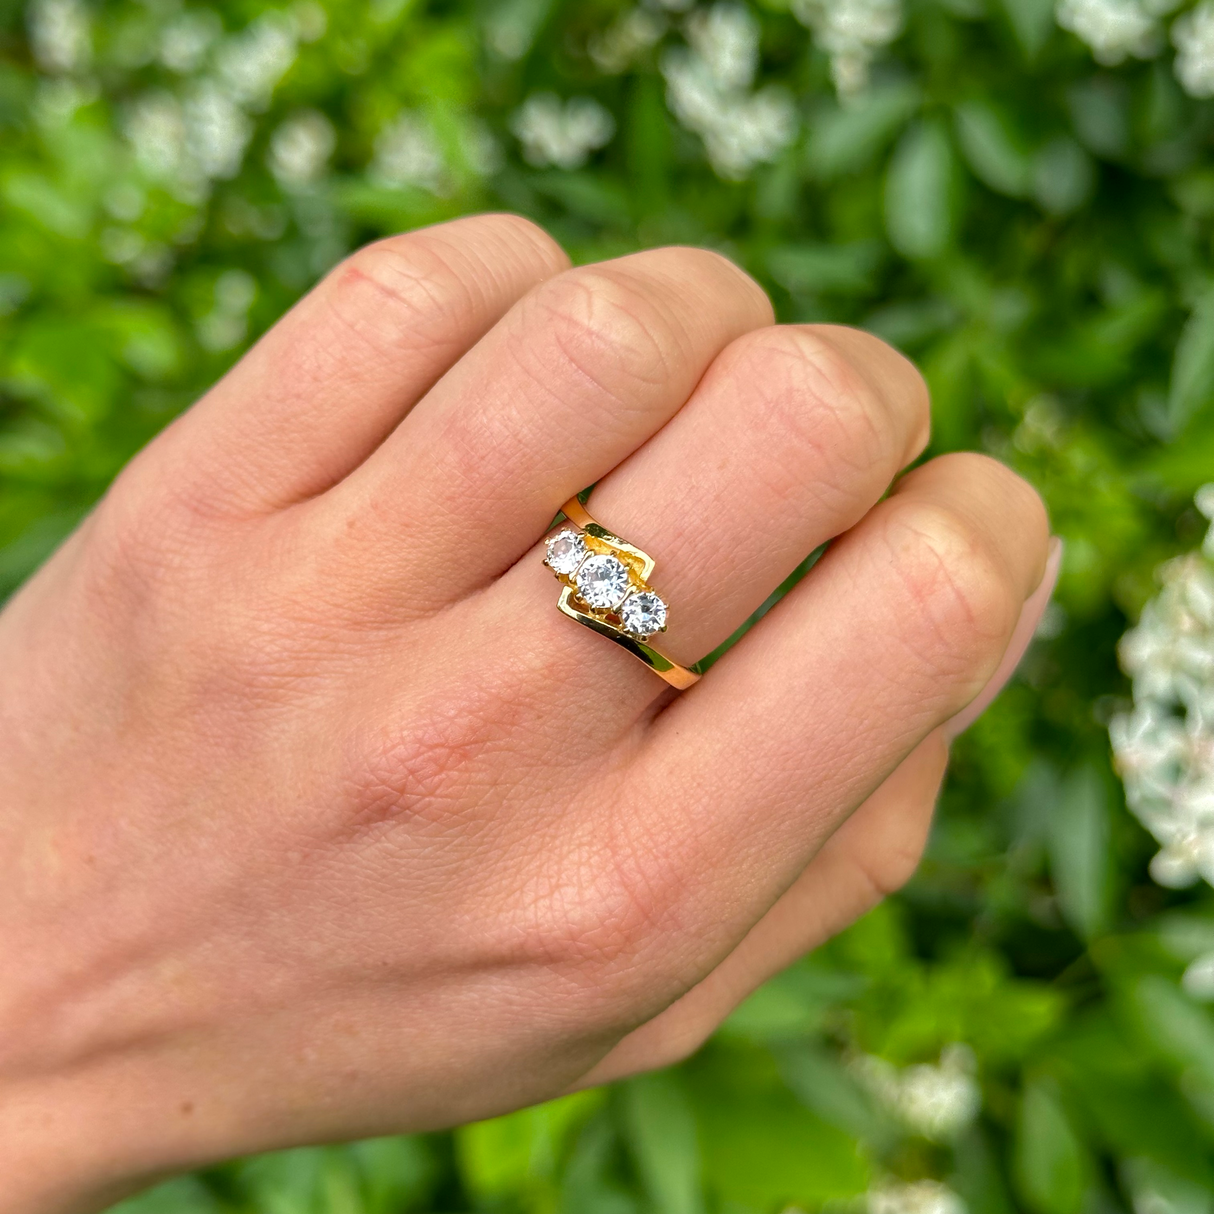 Vintage, 1967 Three-Stone White Sapphire Engagement Ring, 18ct Yellow Gold worn on hand.